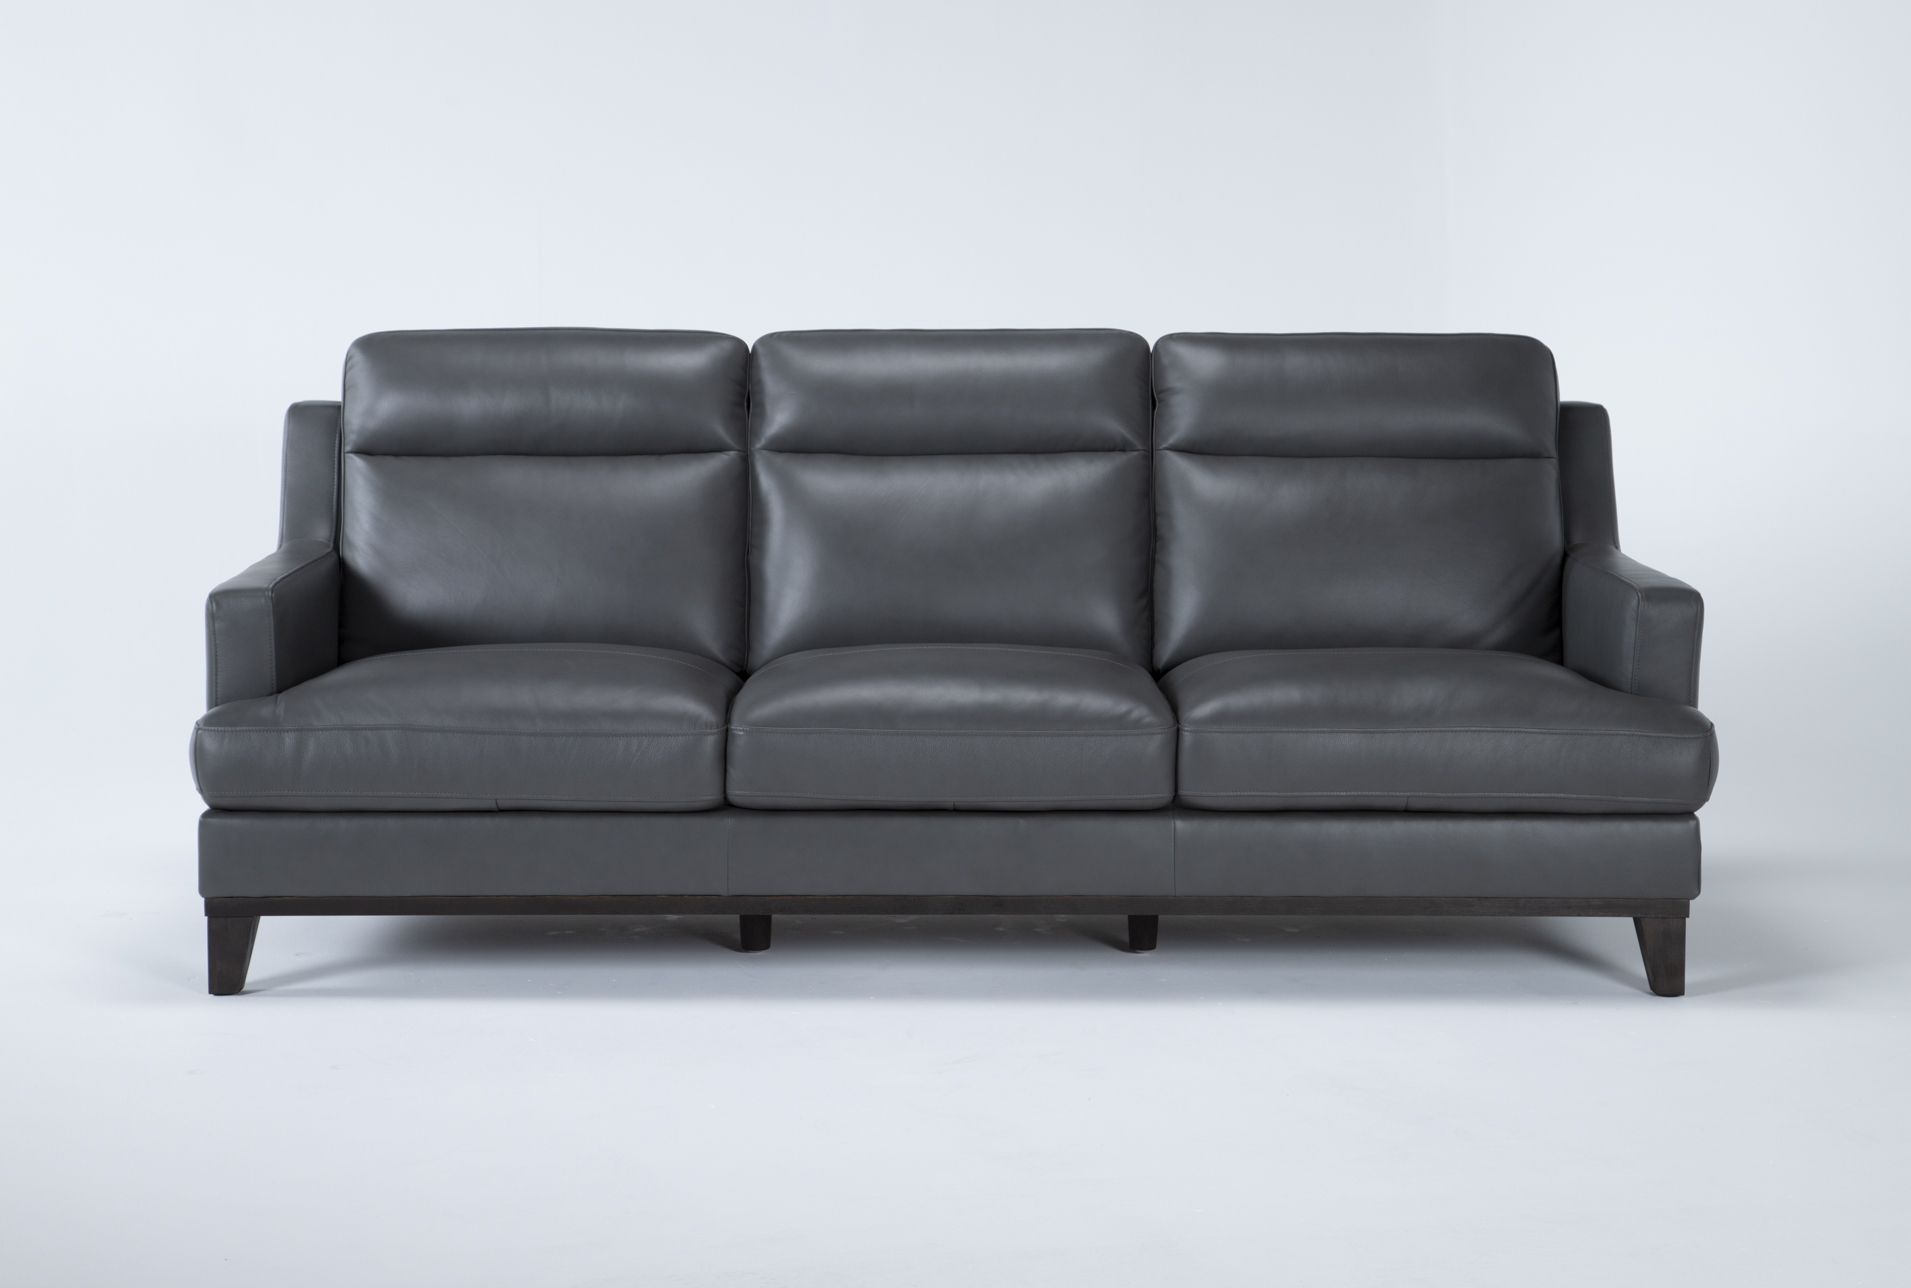 Sancho Leather Sofa Set Dark Grey In Sofas In Dark Grey (View 19 of 20)